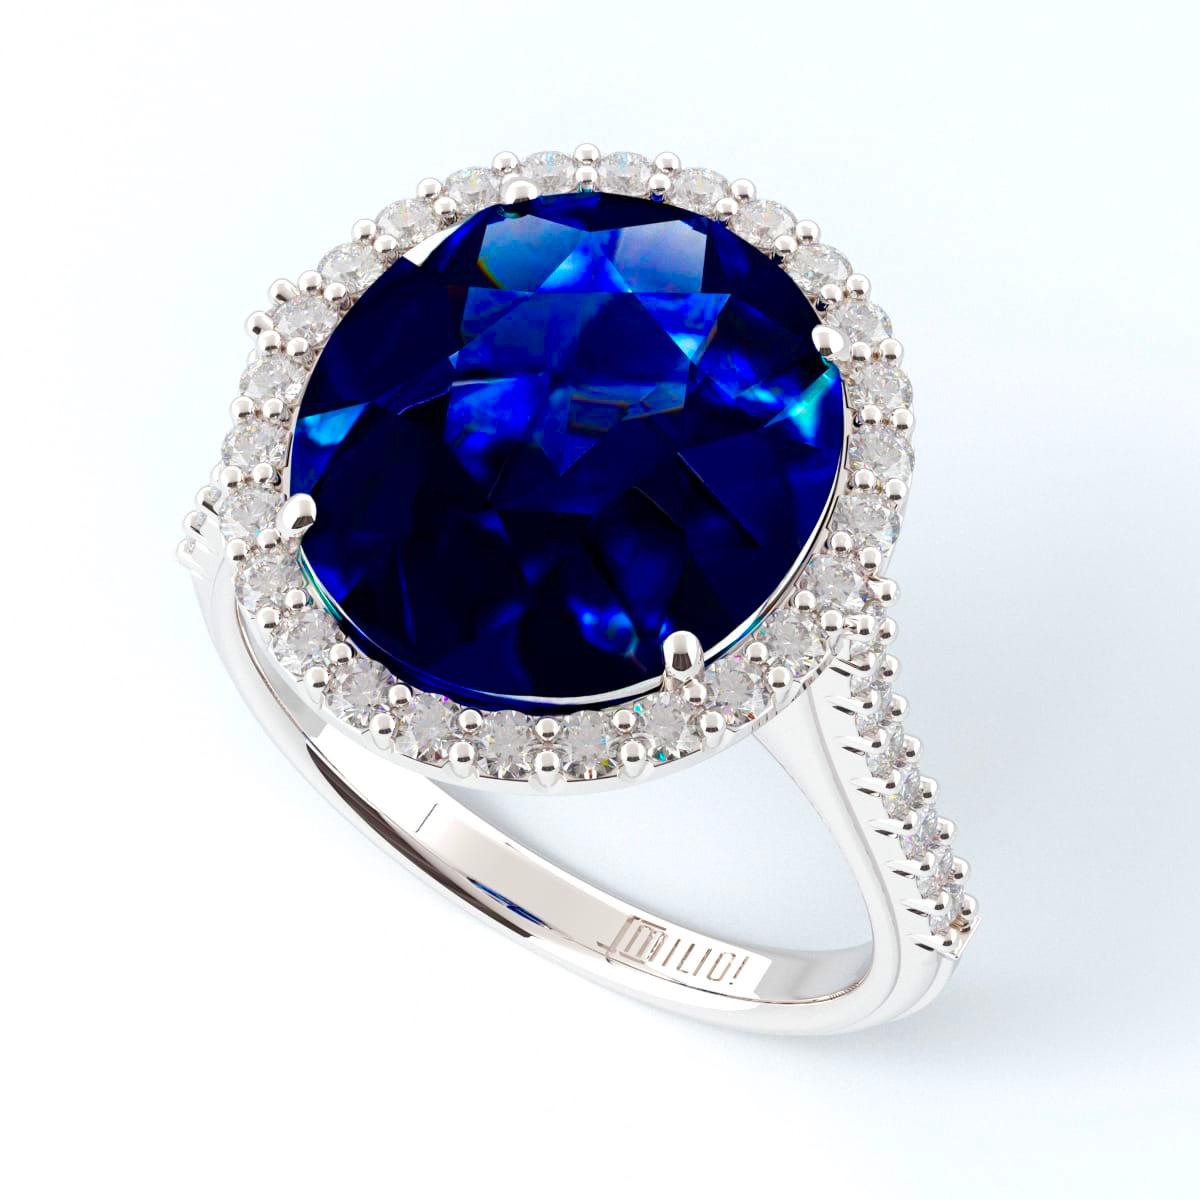 Emilio Jewelry 9.00 Carat Certified Ceylon Sapphire Diamond Ring 6